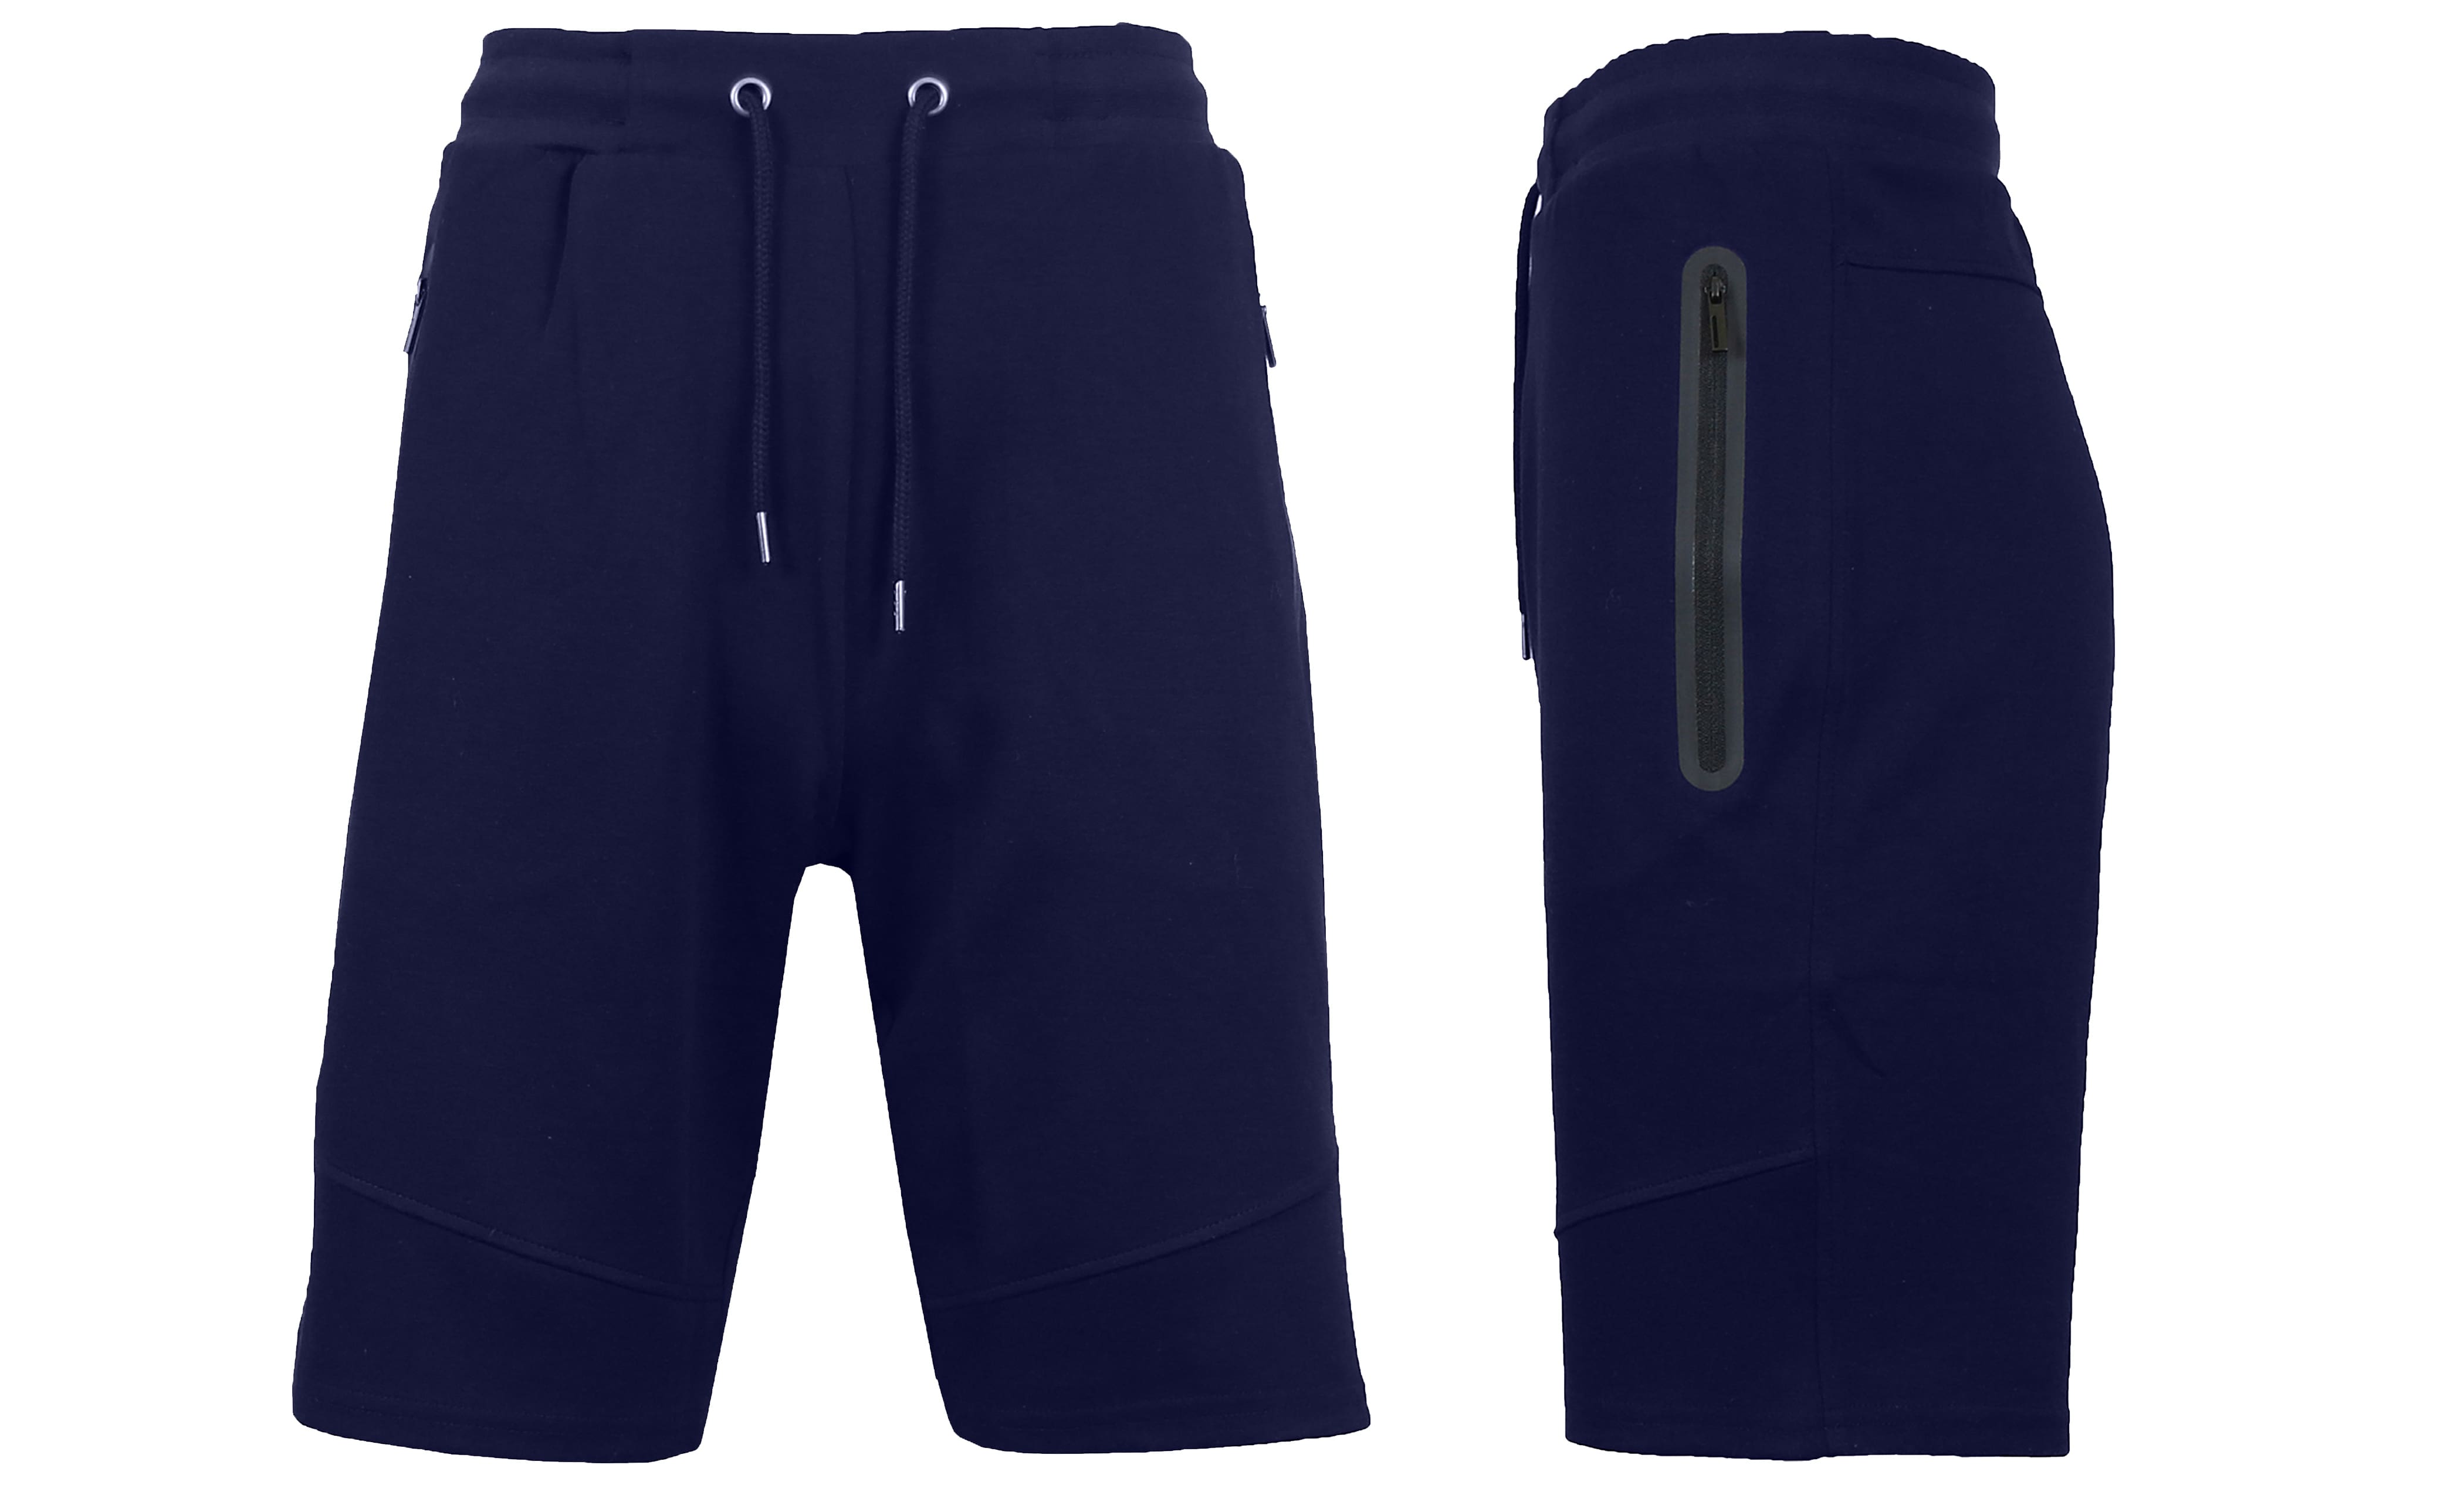 Galaxy by Harvic Lounge Tech Men's Jogger Shorts